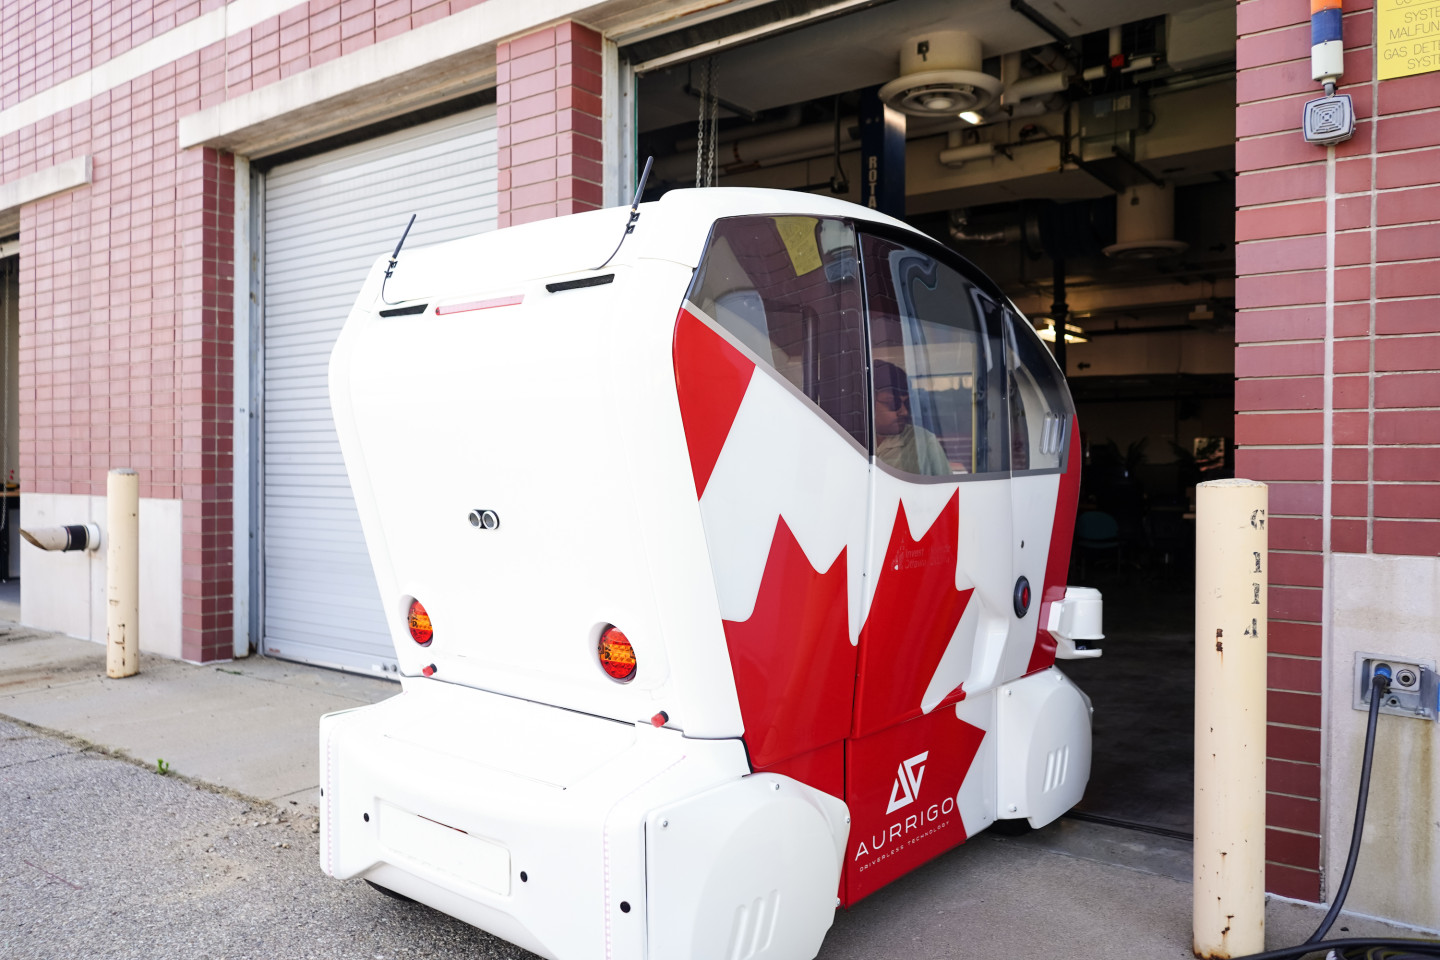 An autonomous vehicle drives through a garage door.